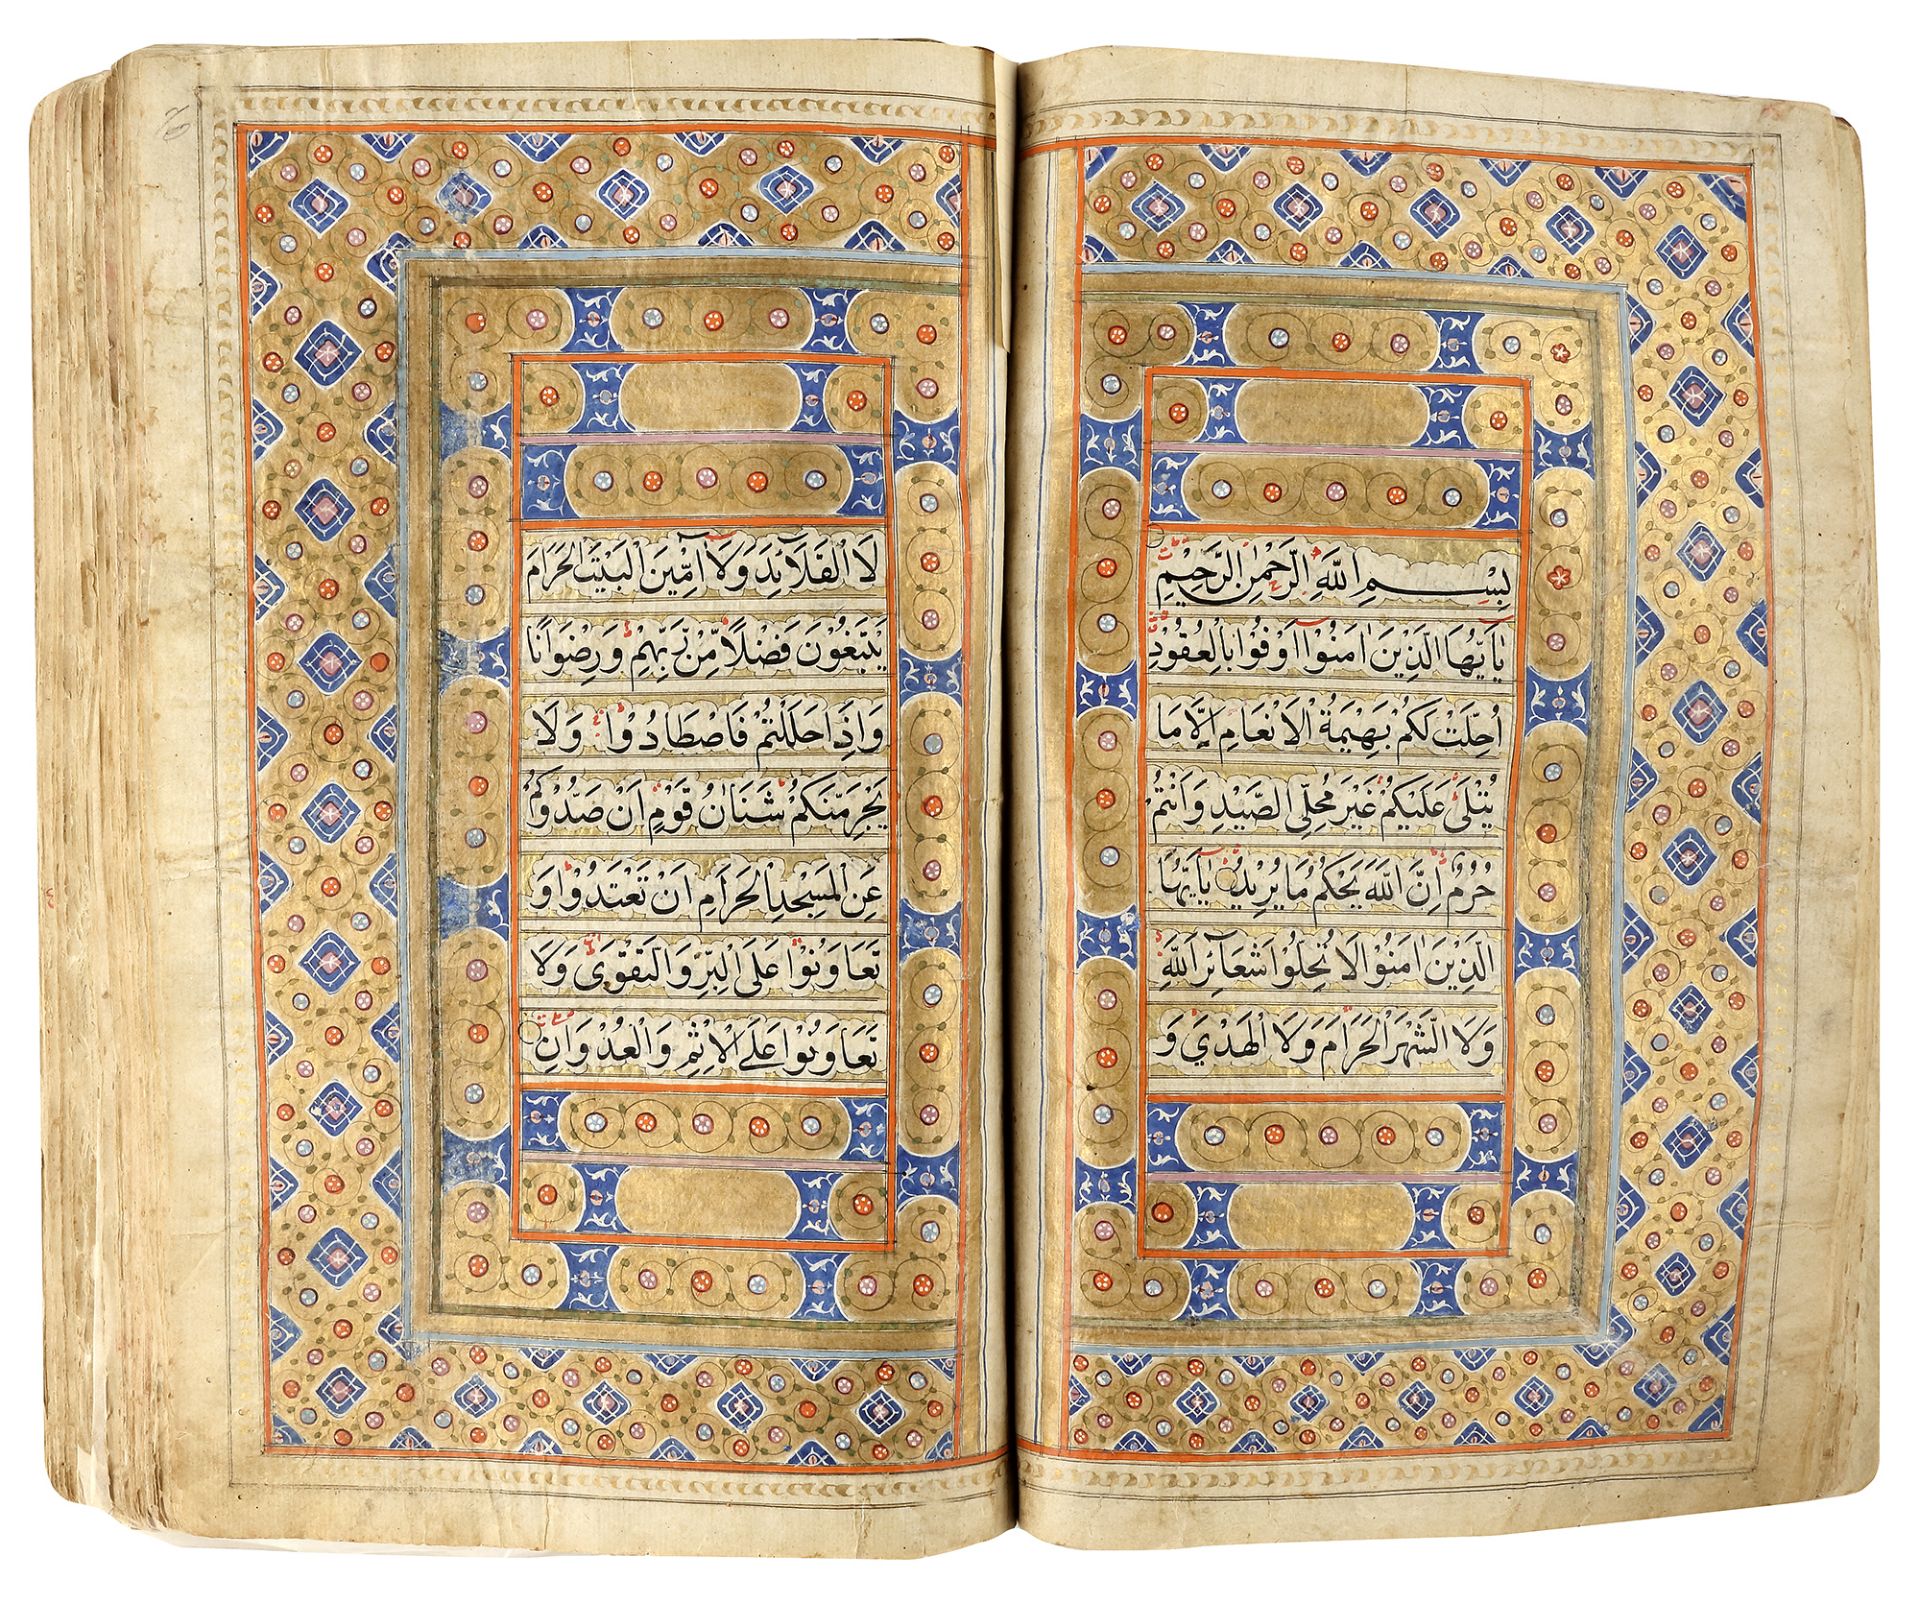 A KASHMIR LEATHER-BOUND QURAN, WRITTEN BY MUHAMMED SAIF AL-ALLAH AL-ANSARI AL-LAHORI, DATED 1248AH/1